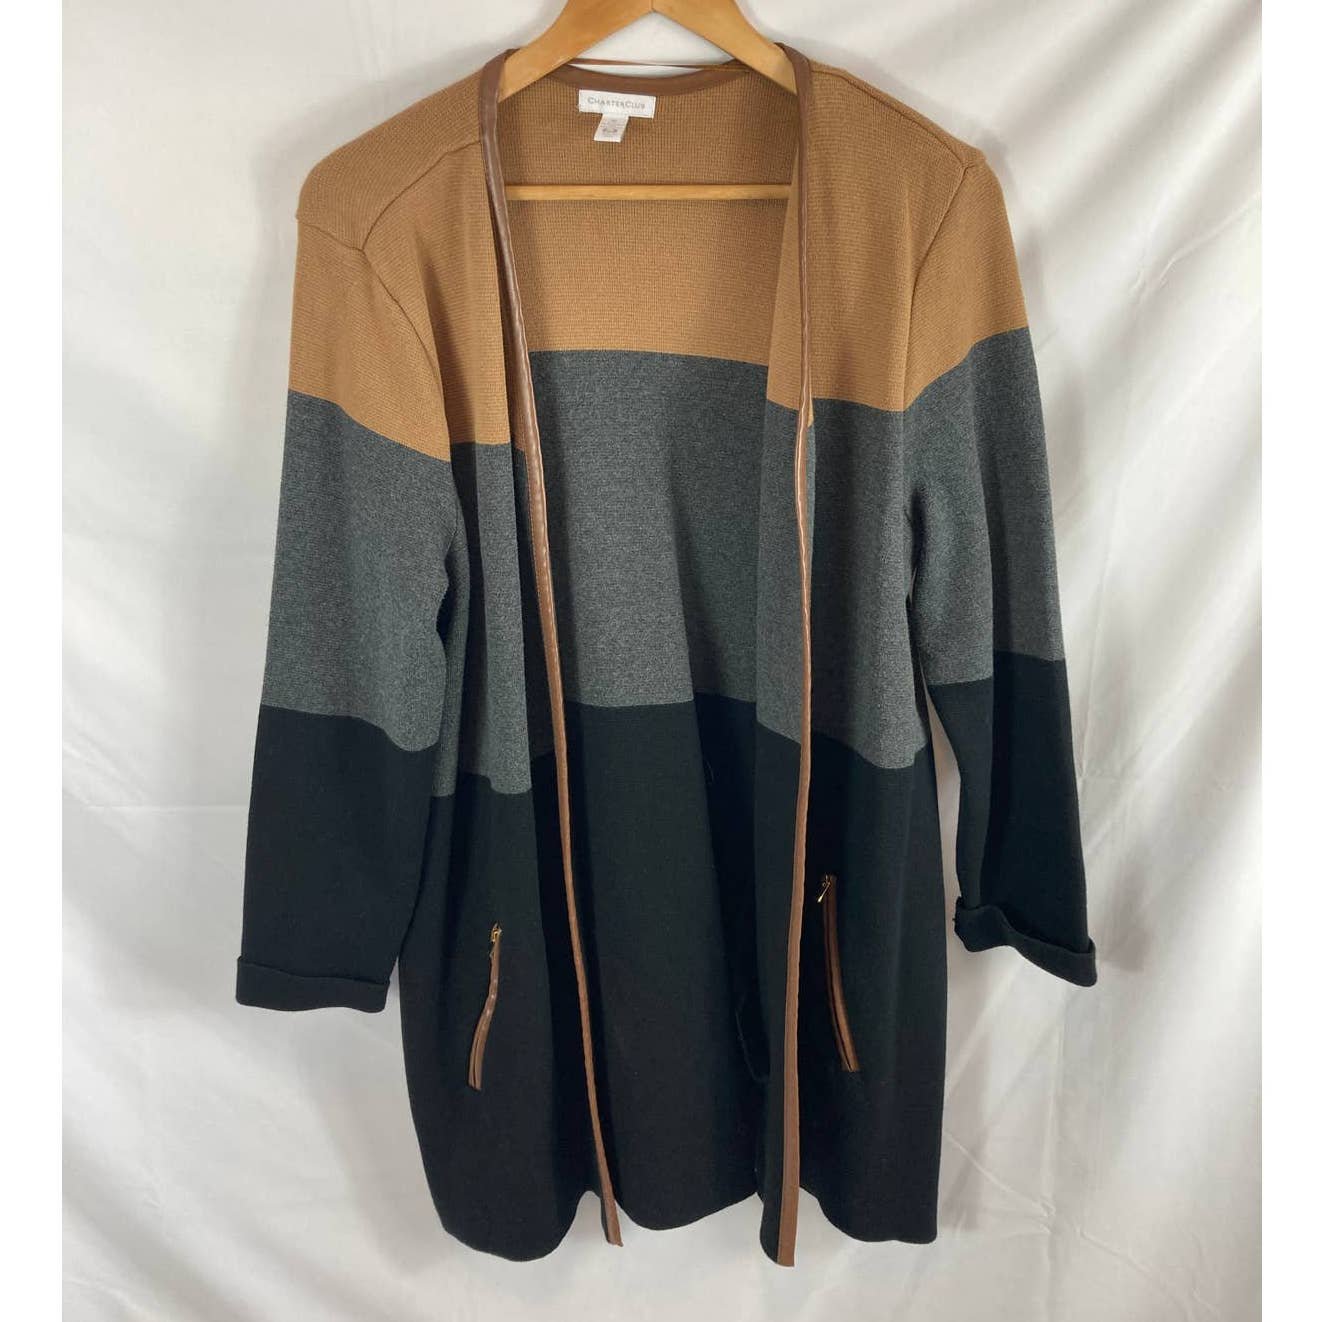 Popular Charter Club Striped Longline sweater jacket si